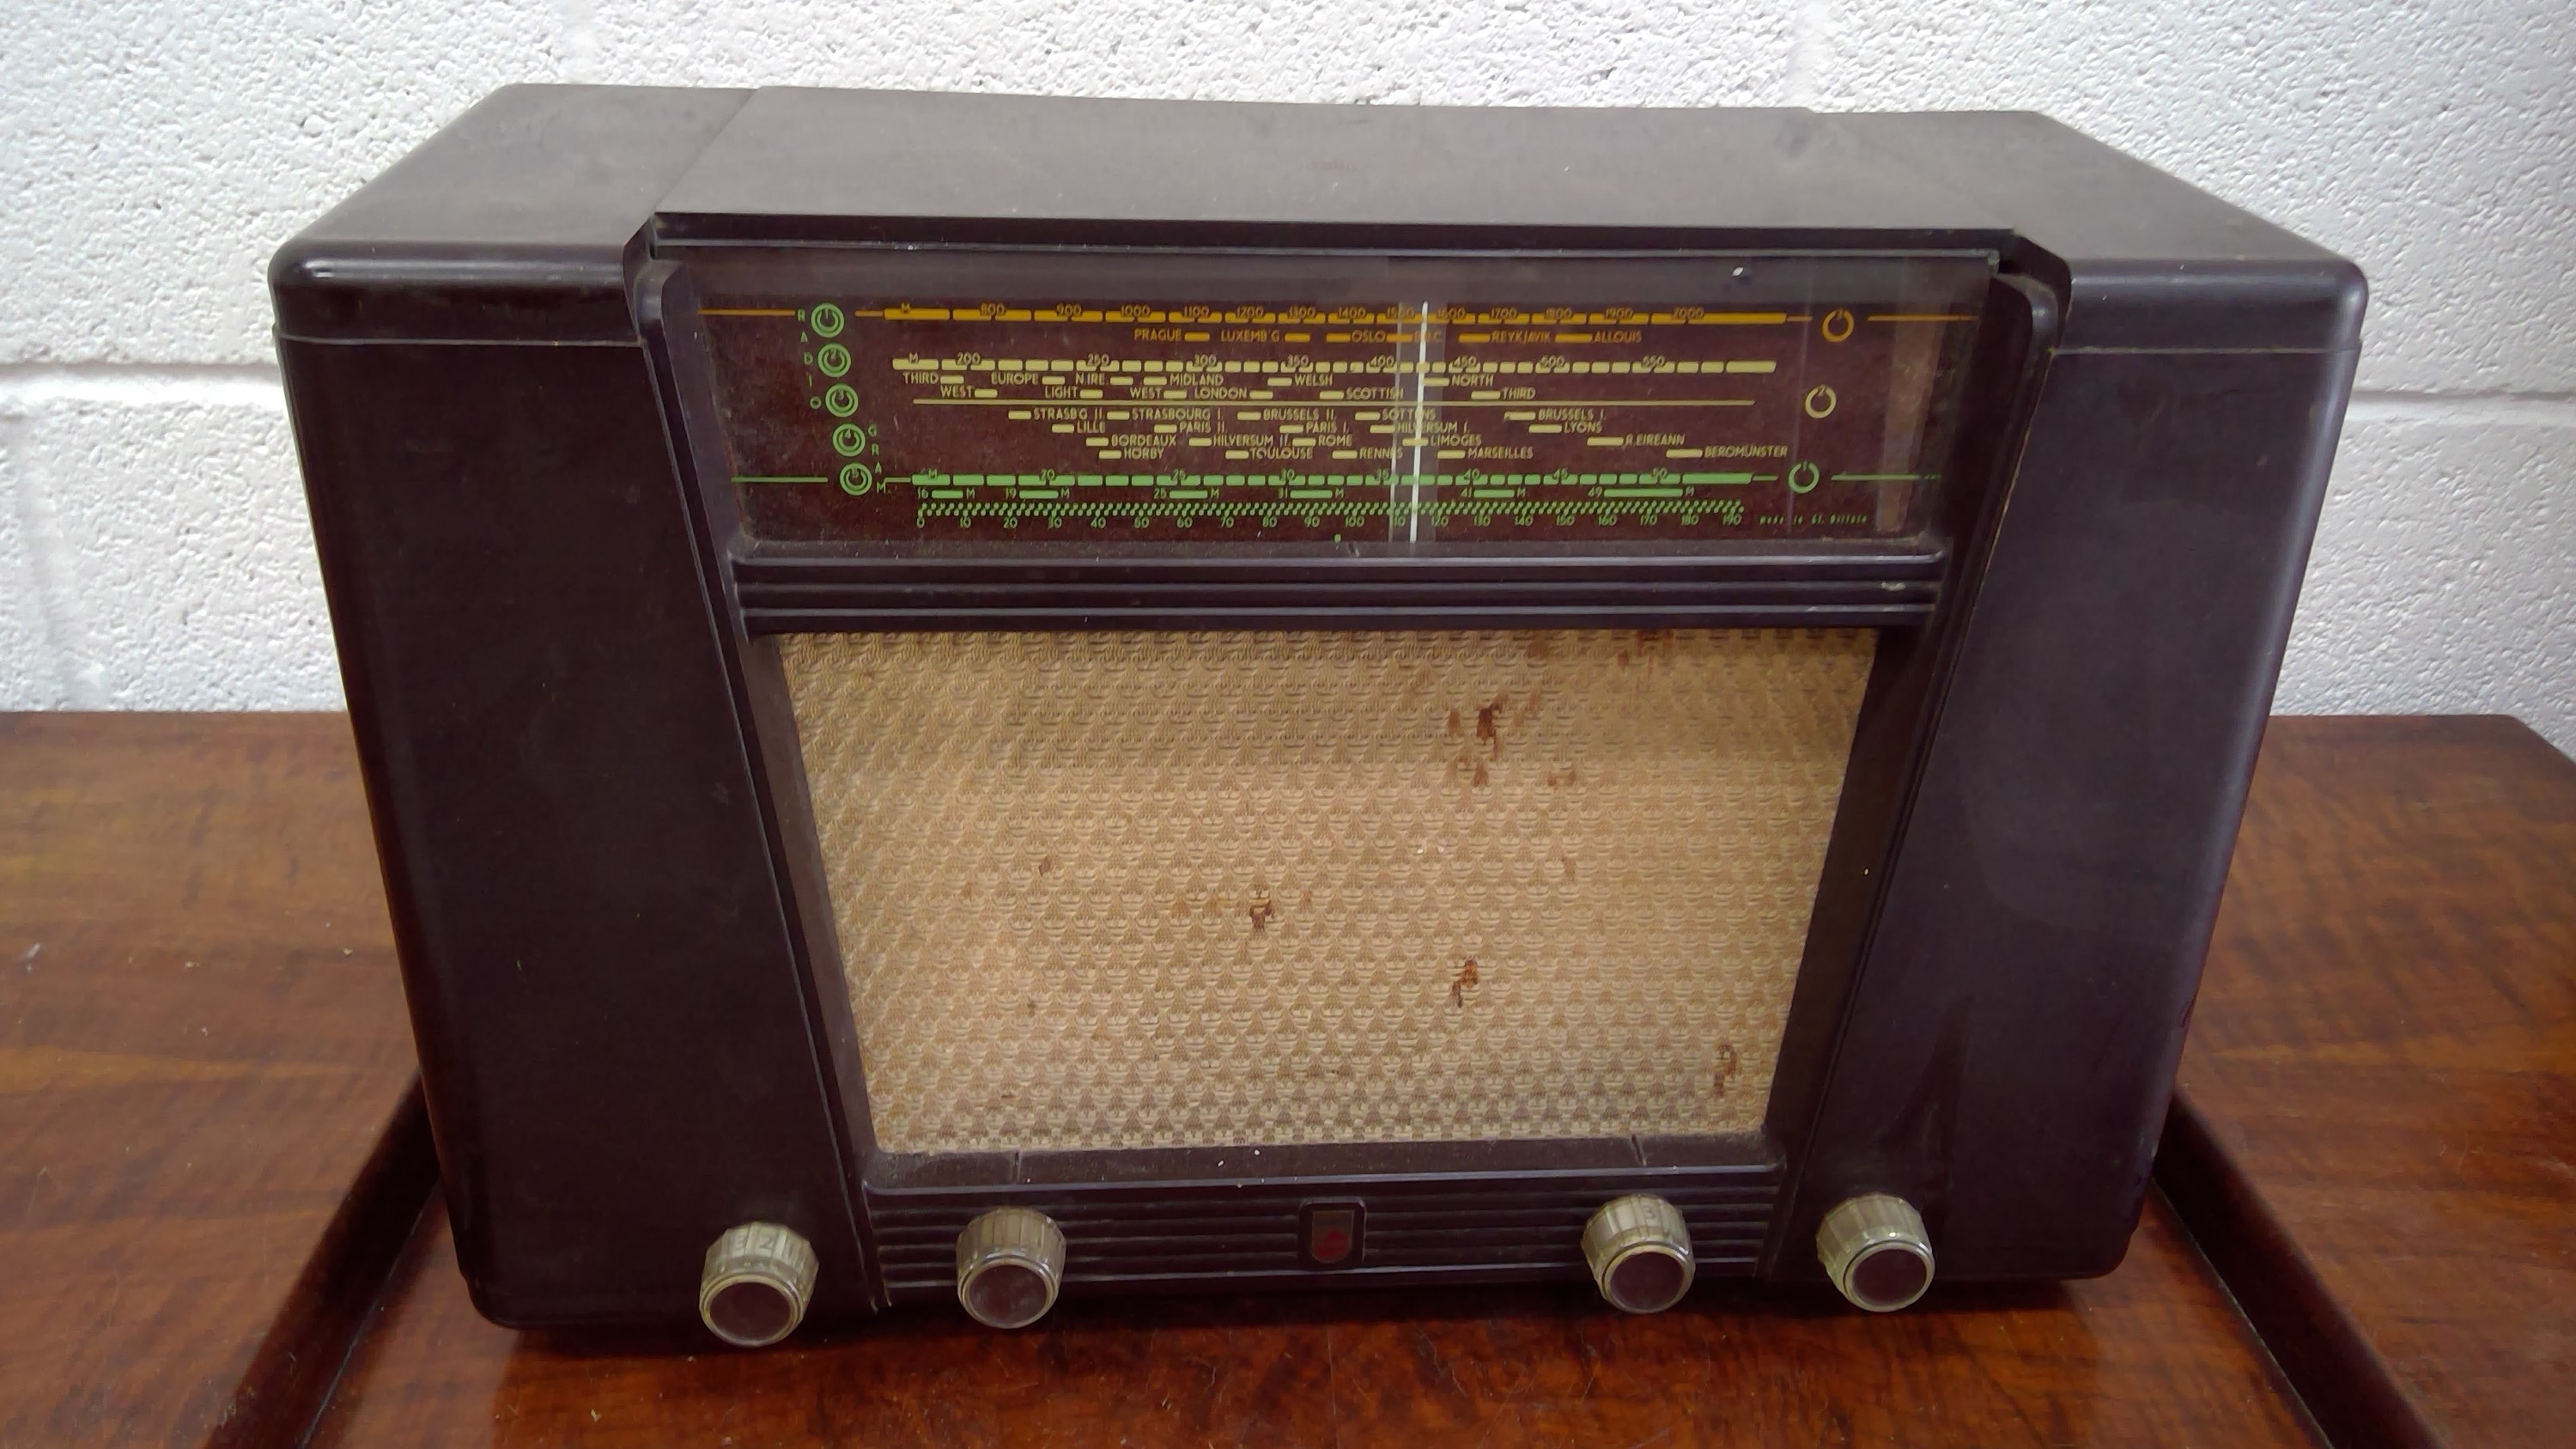 A Philips bakelite radio.